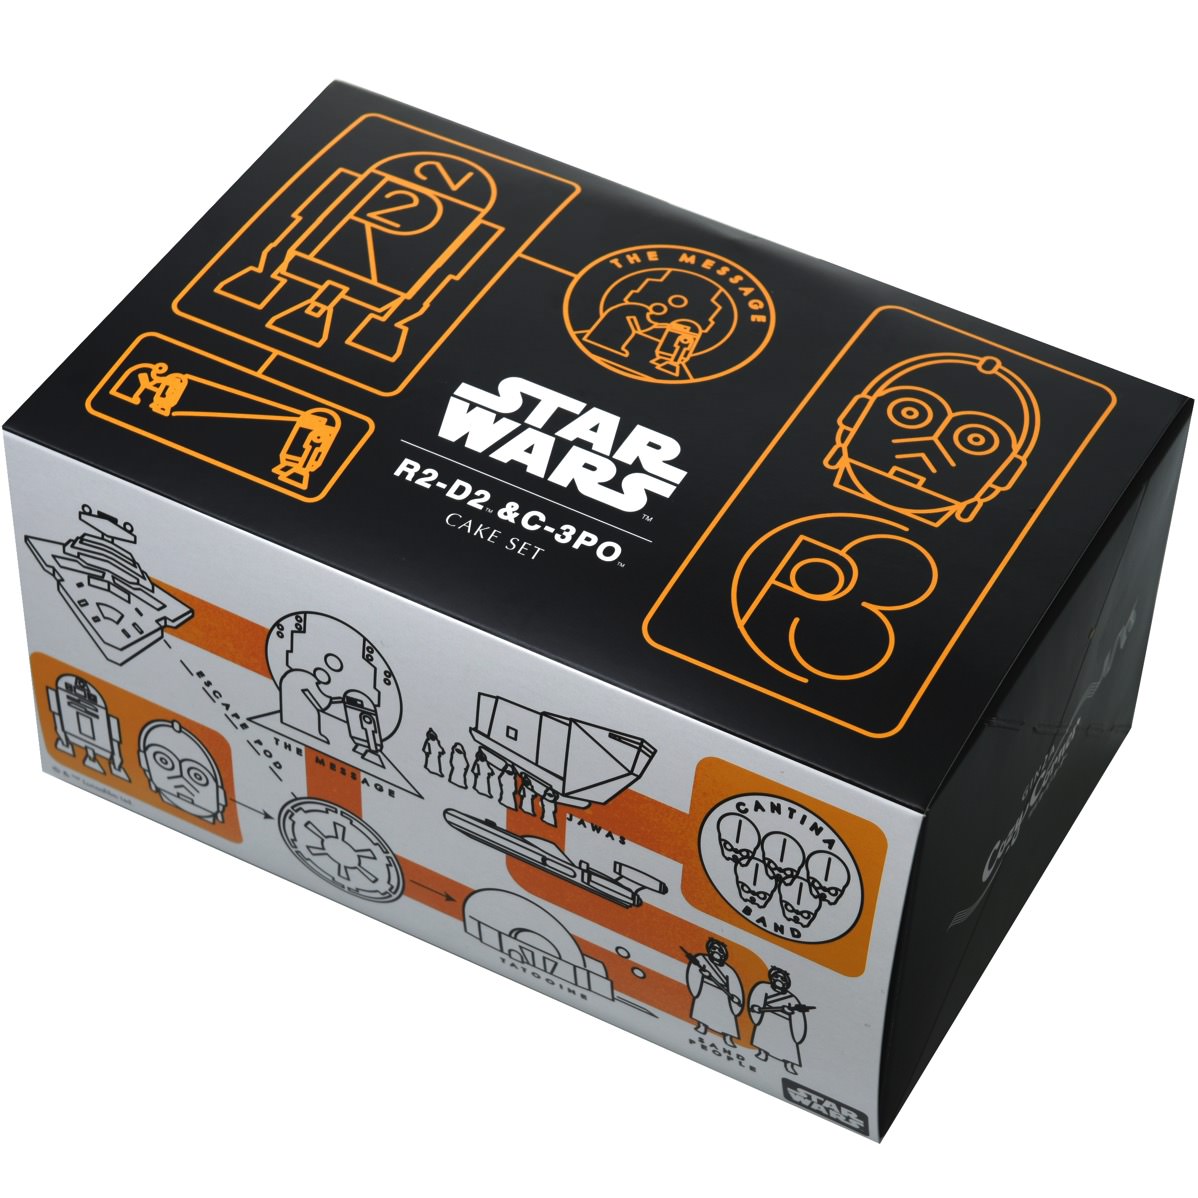  “R2-D2＆C-3PO”ケーキセットパッケージ